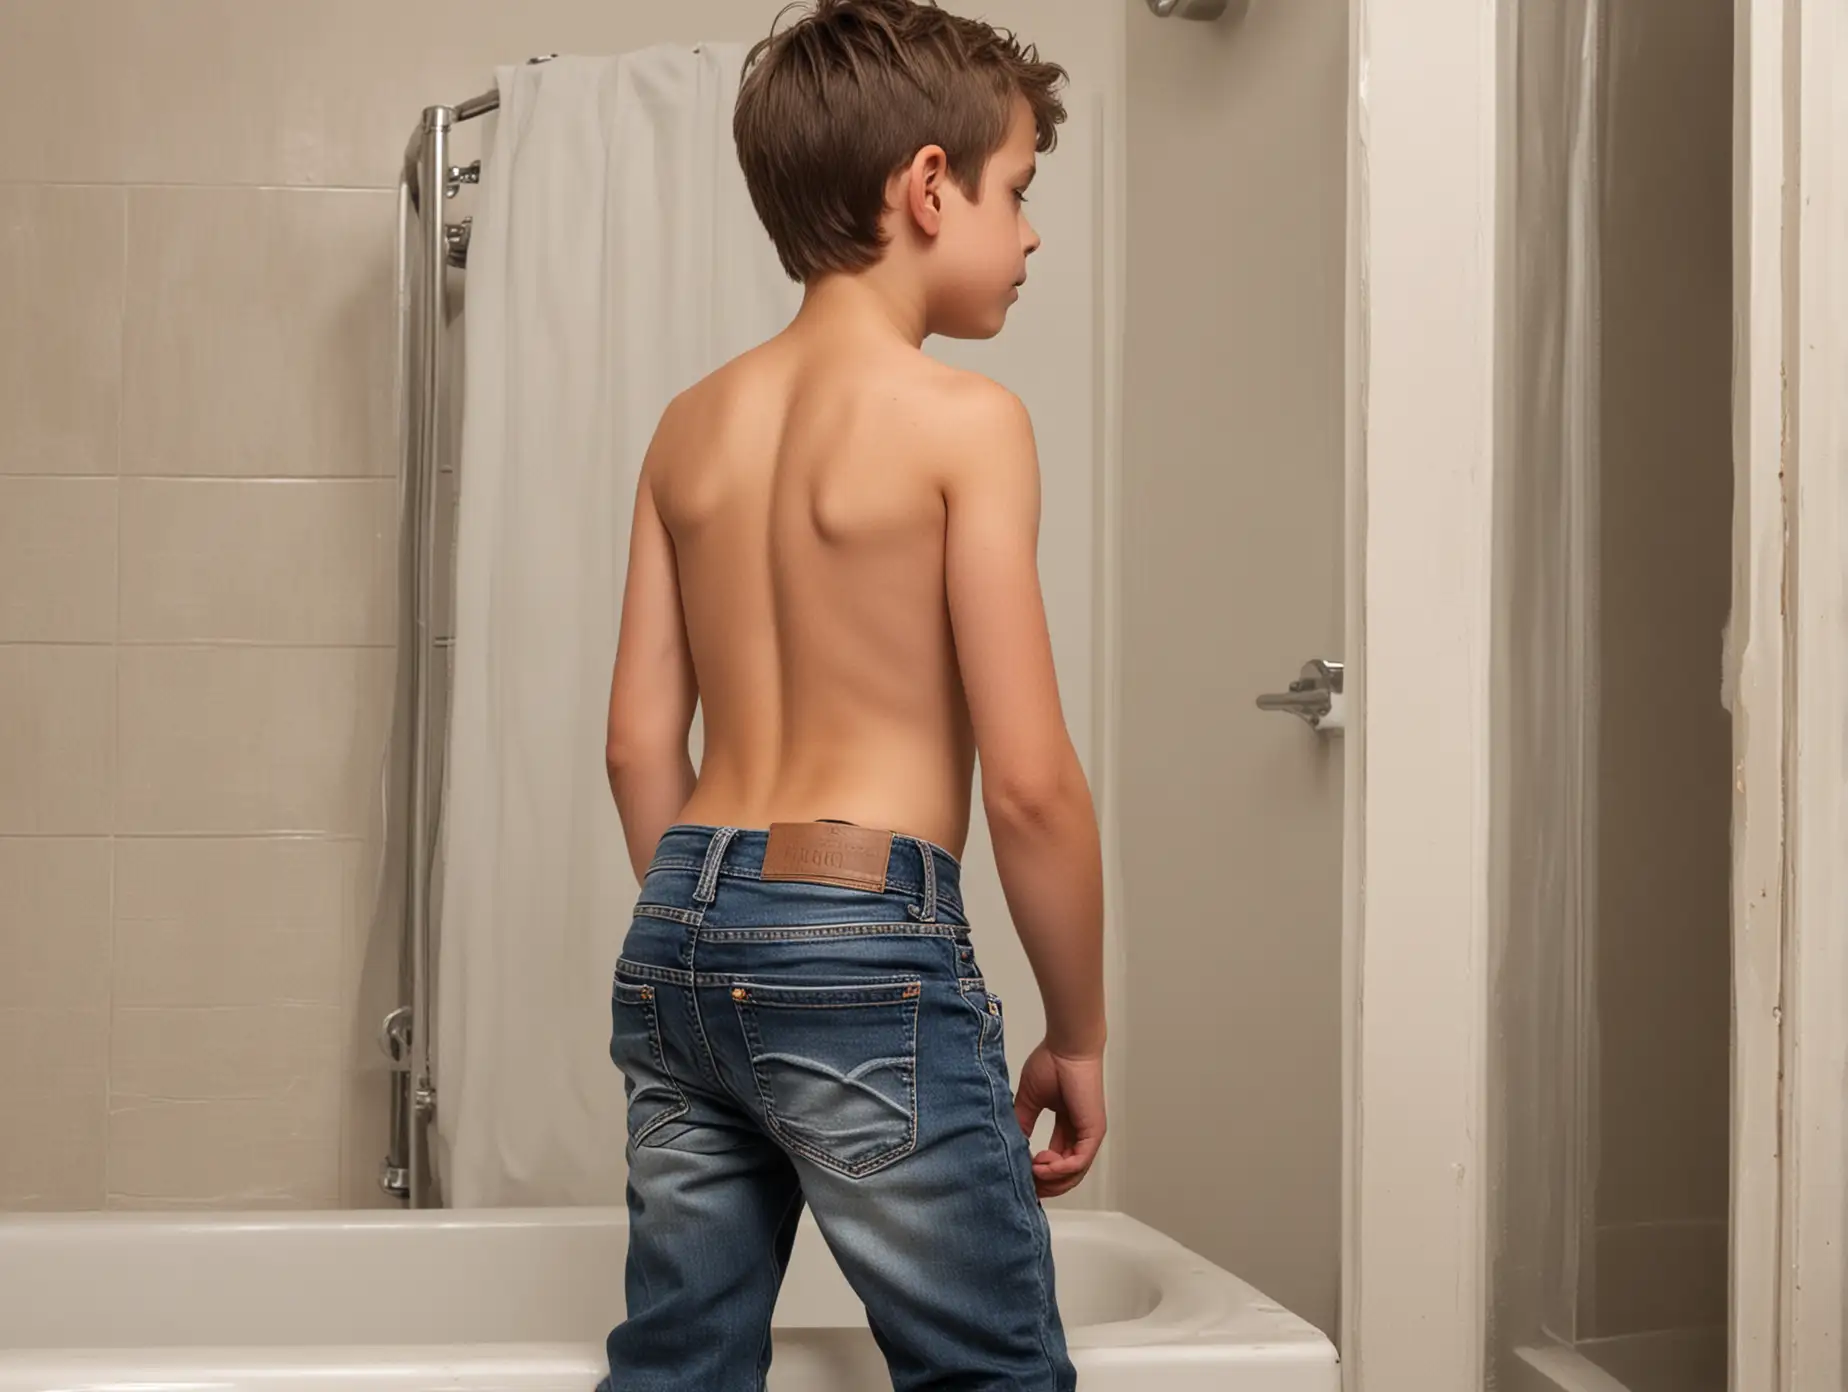 Playful-10YearOld-Boy-in-HalfOn-Jeans-Inside-a-Bathroom